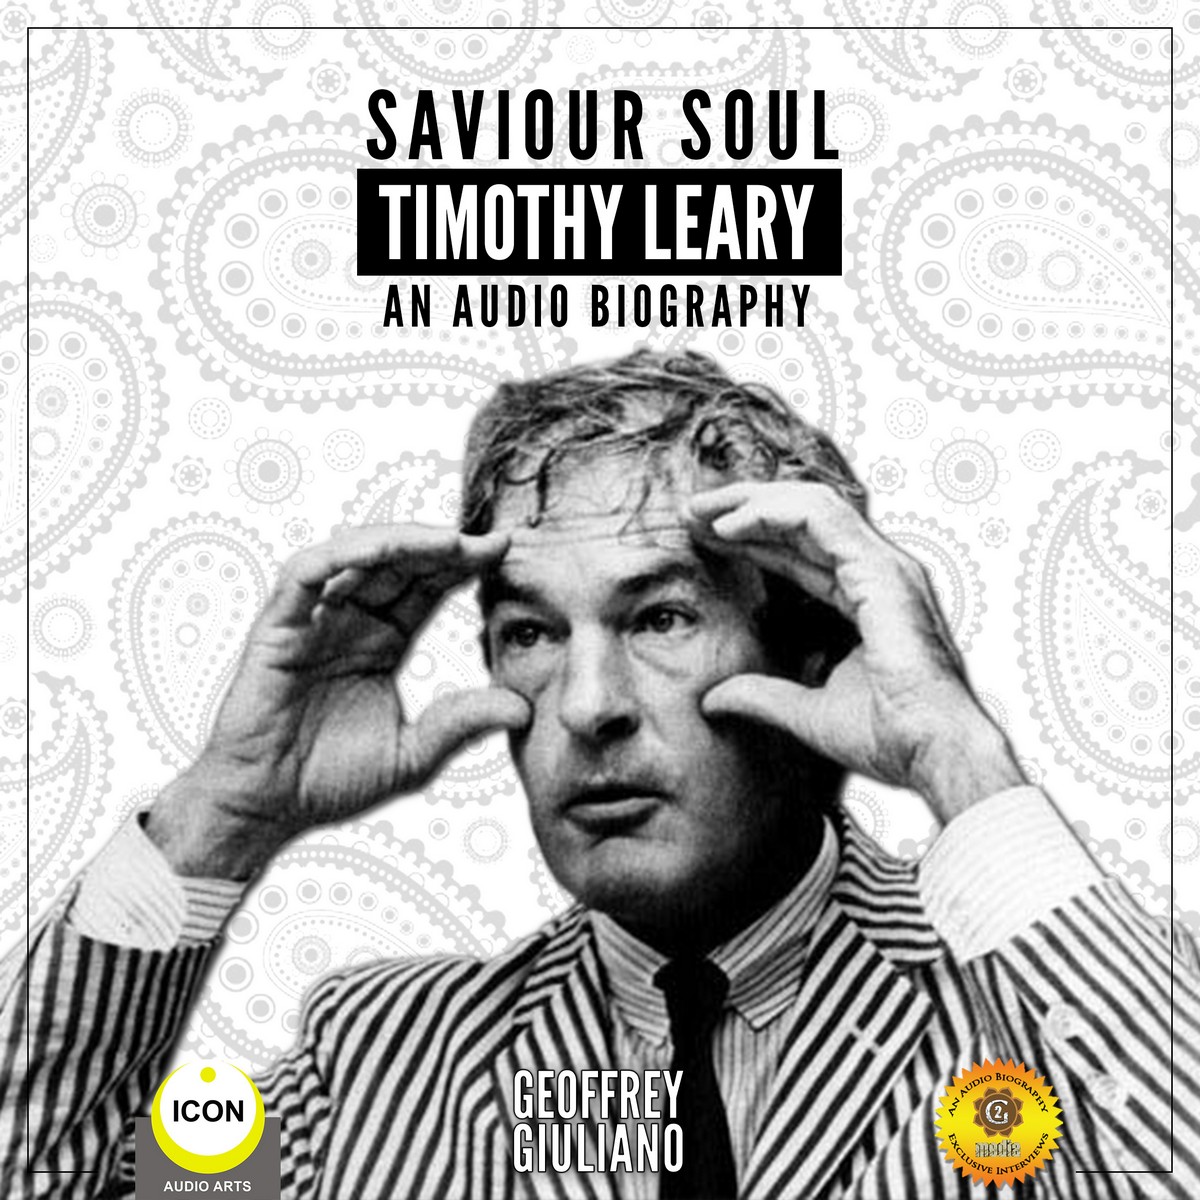 Saviour Soul Timothy Leary – An Audio Biography